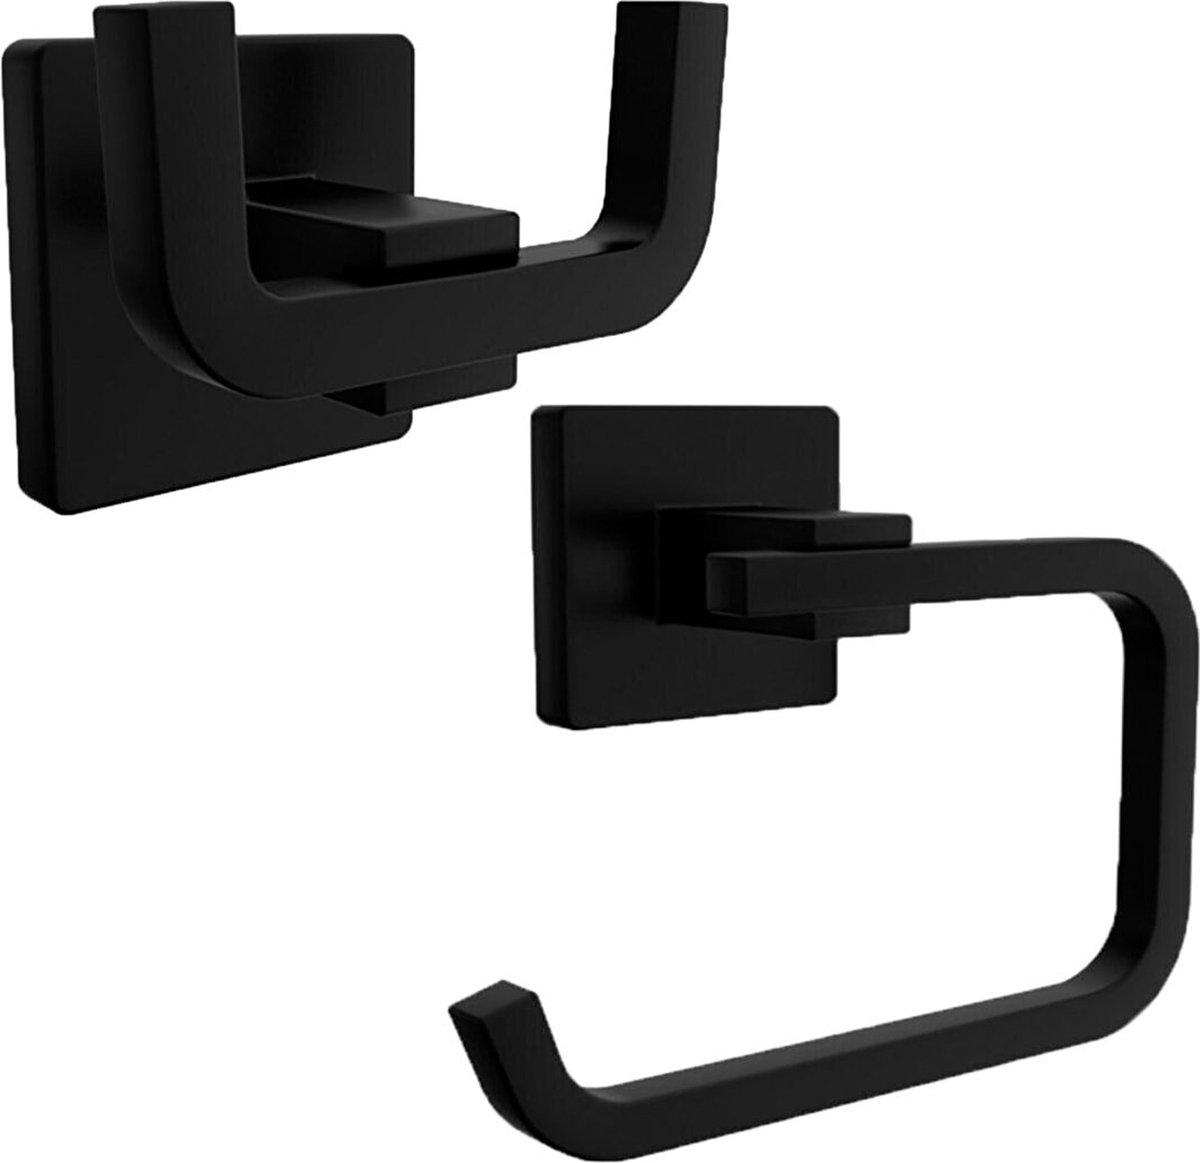 Handdoekhaak Zwart - Toiletrolhouder Zwart Set - RVS - Wandmontage - Roestvrij staal van hoge kwaliteit